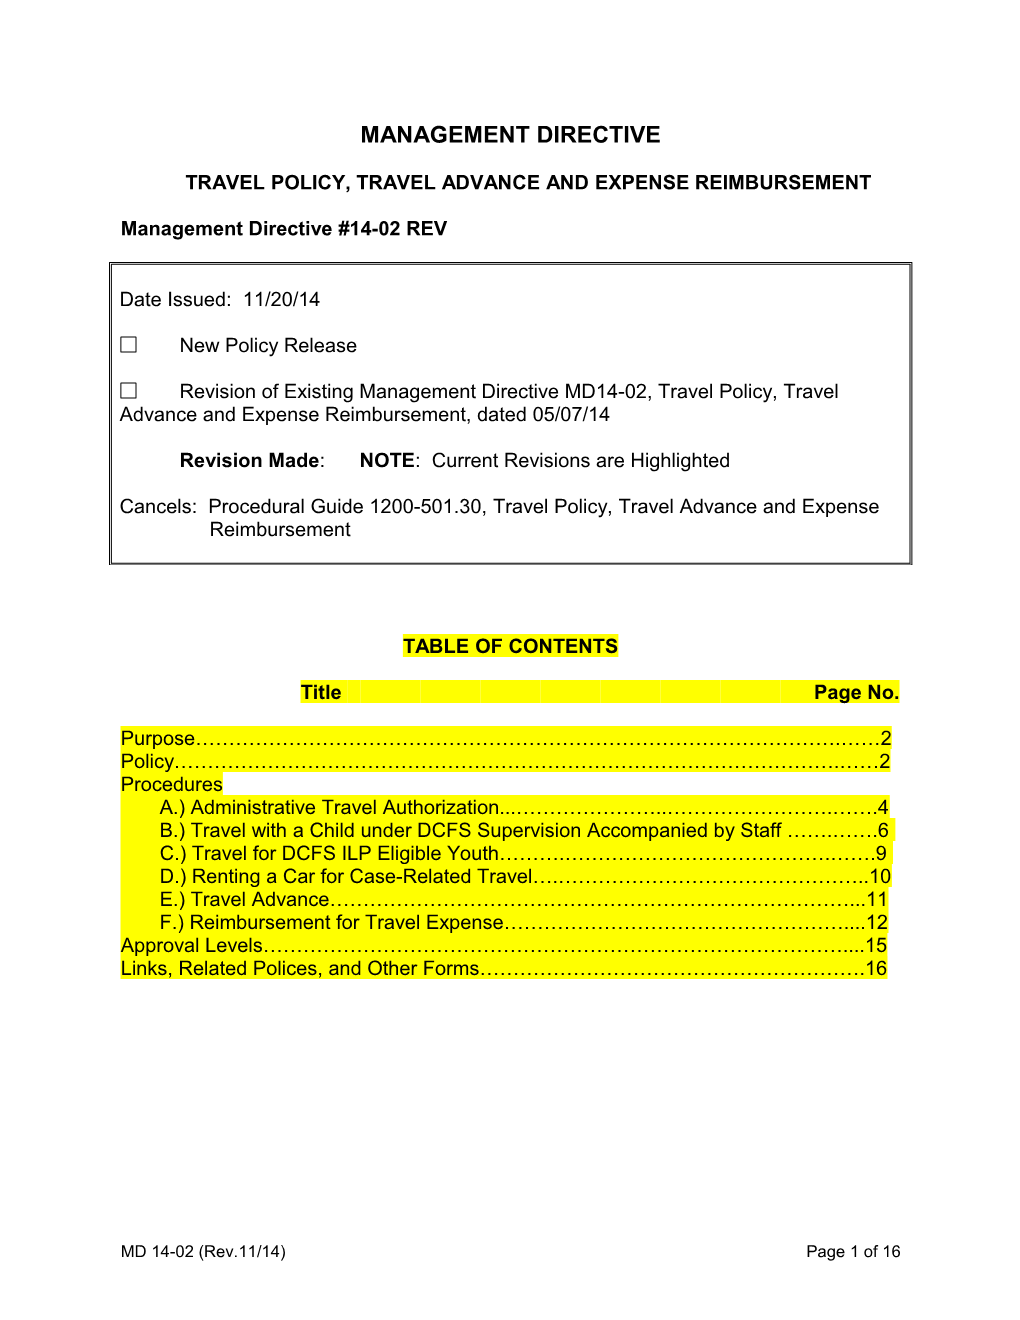 Travel Policy, Travel Advance and Expense Reimbursement